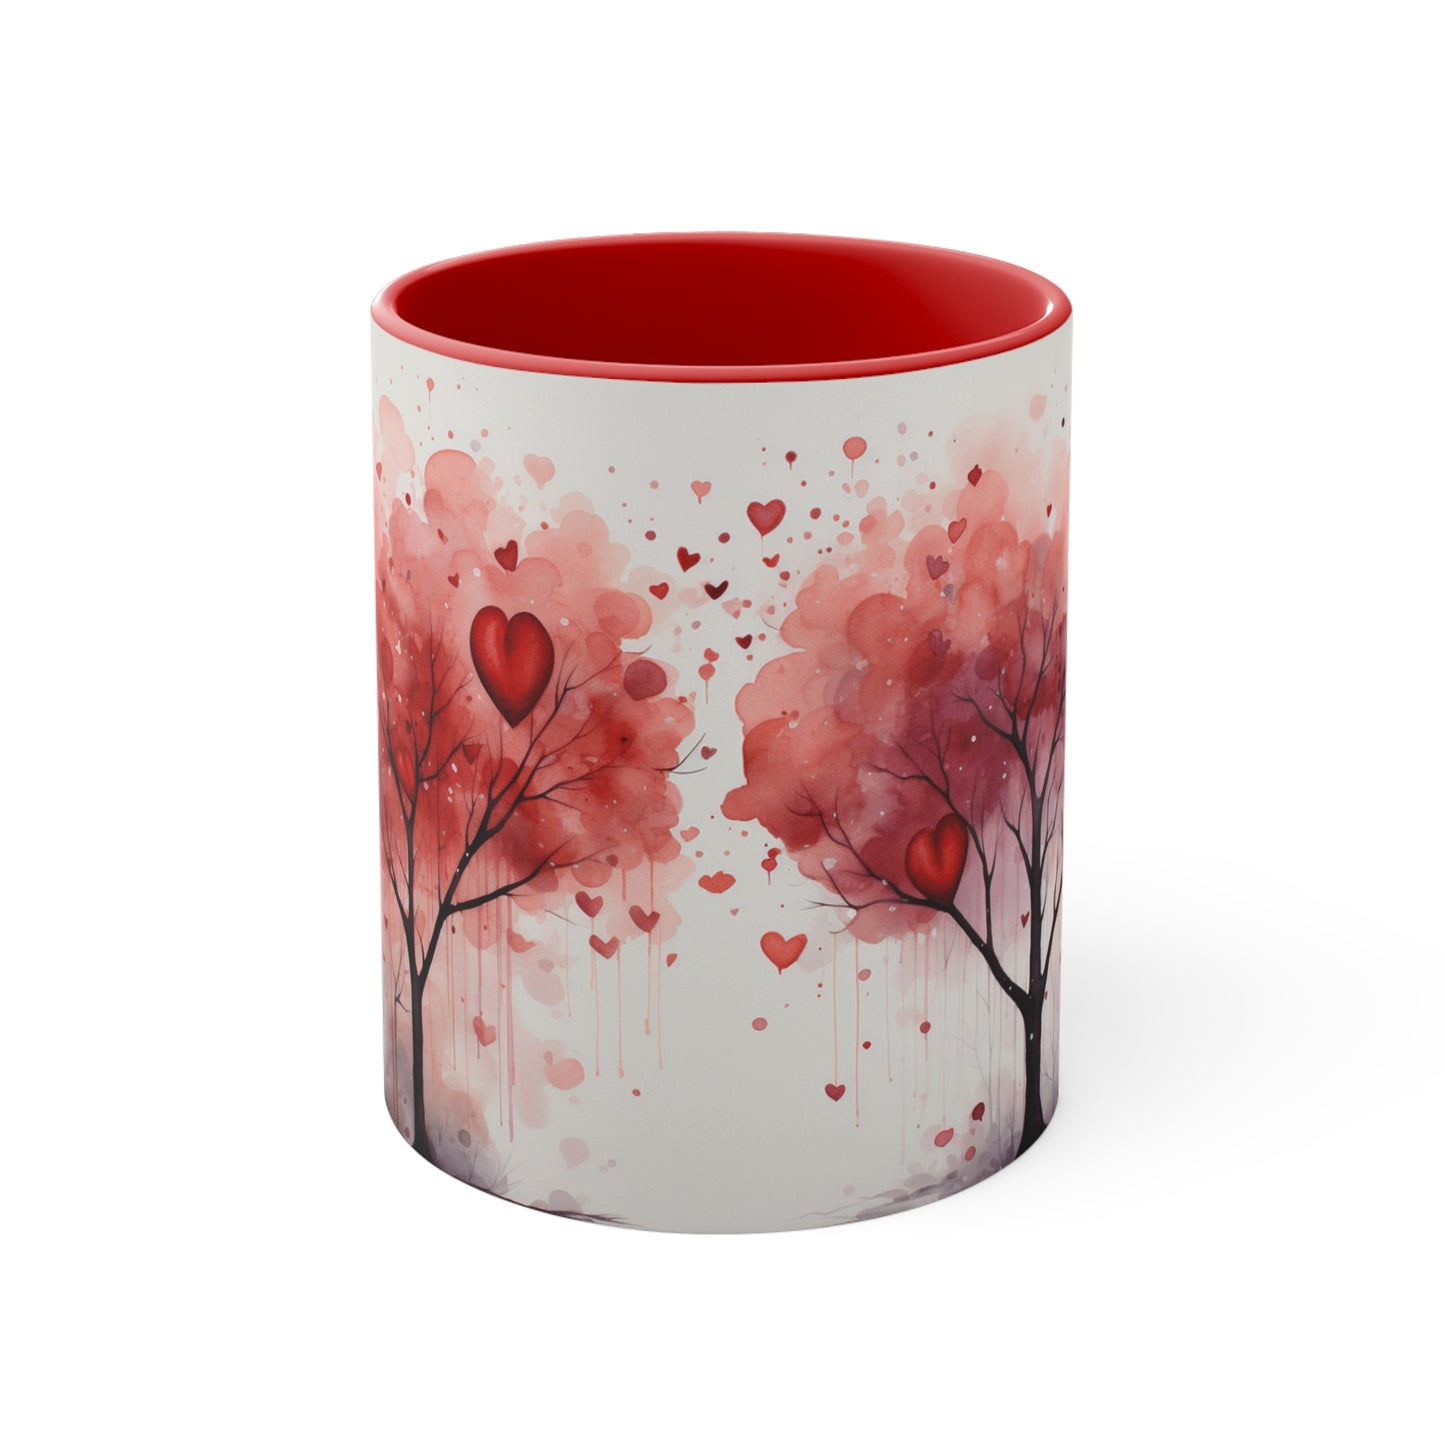 Budding Romance mug, Valentine's Day, Accent Coffee Mug, 11oz mug, valentines gift, gift for her, be mine, heart mug, love you, couples